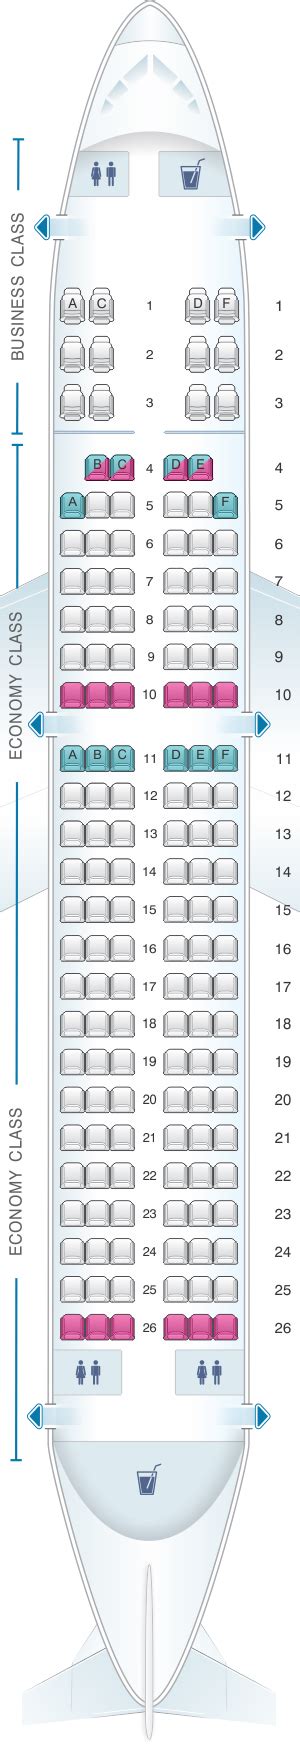 14 Airbus A320 Seating Plan Air India